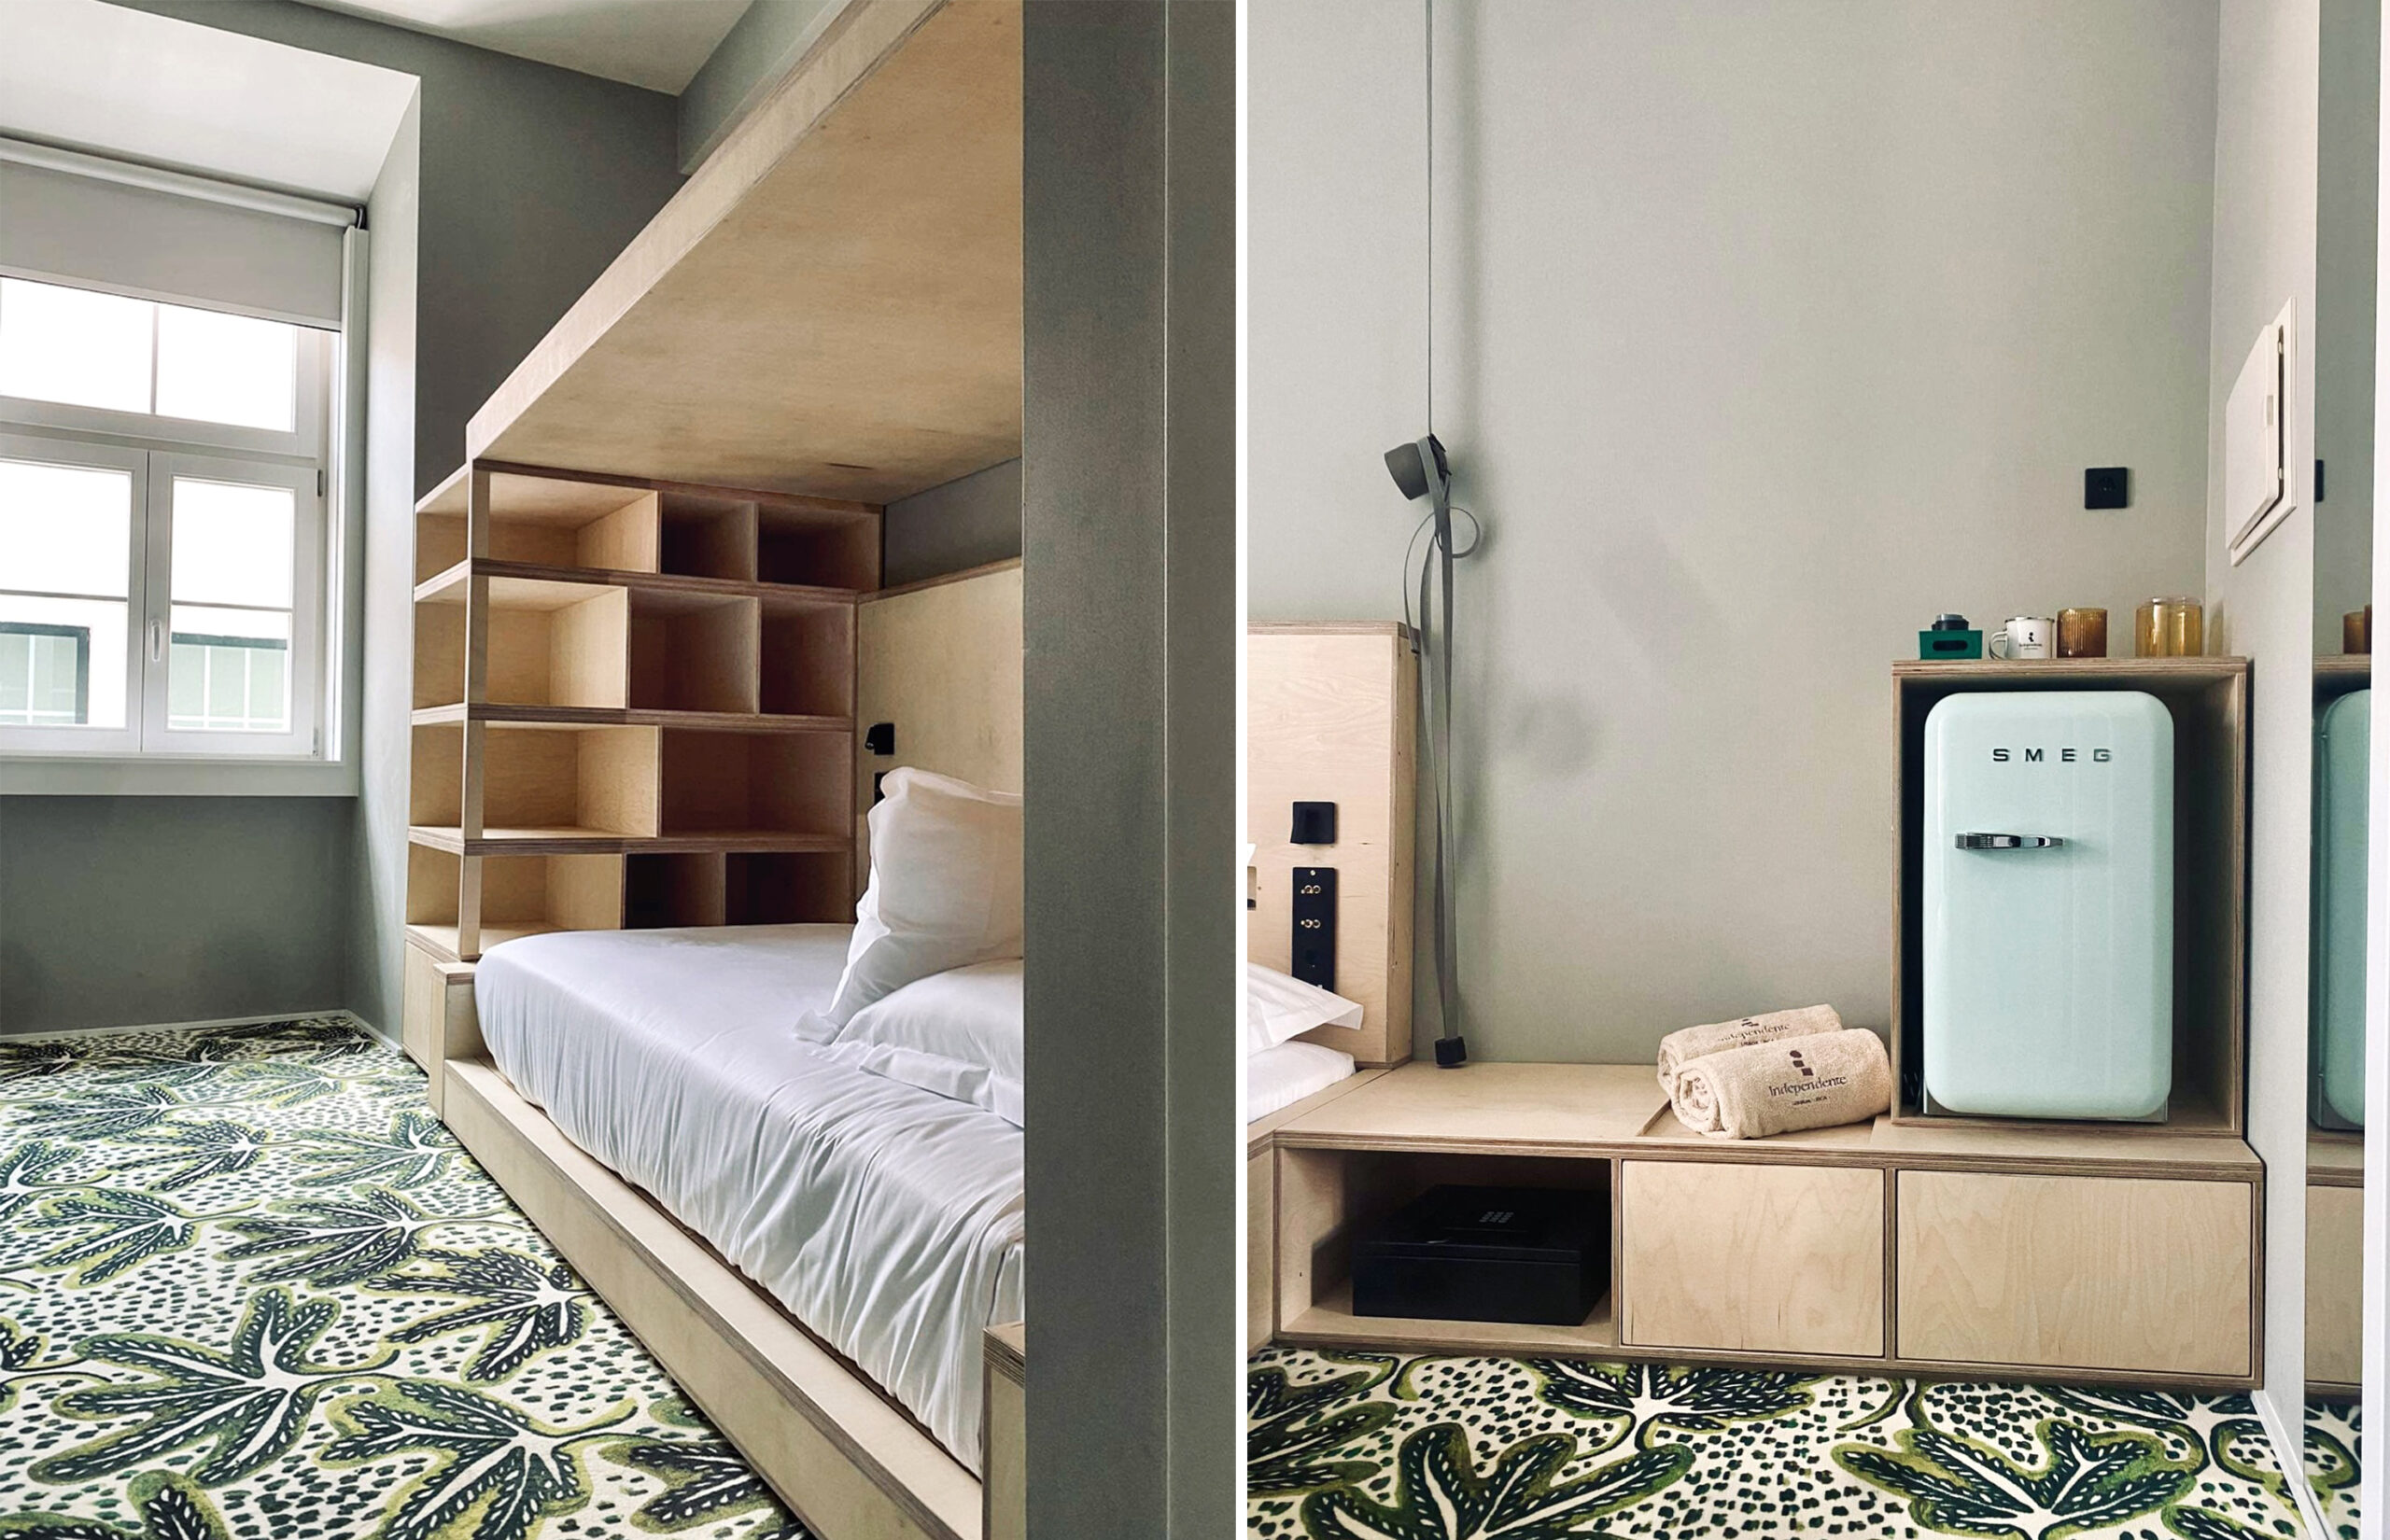 hotel plywood furniture meble hotelowe sklejka bunk bed łóżko piętrowe szafa wardrobe smeg